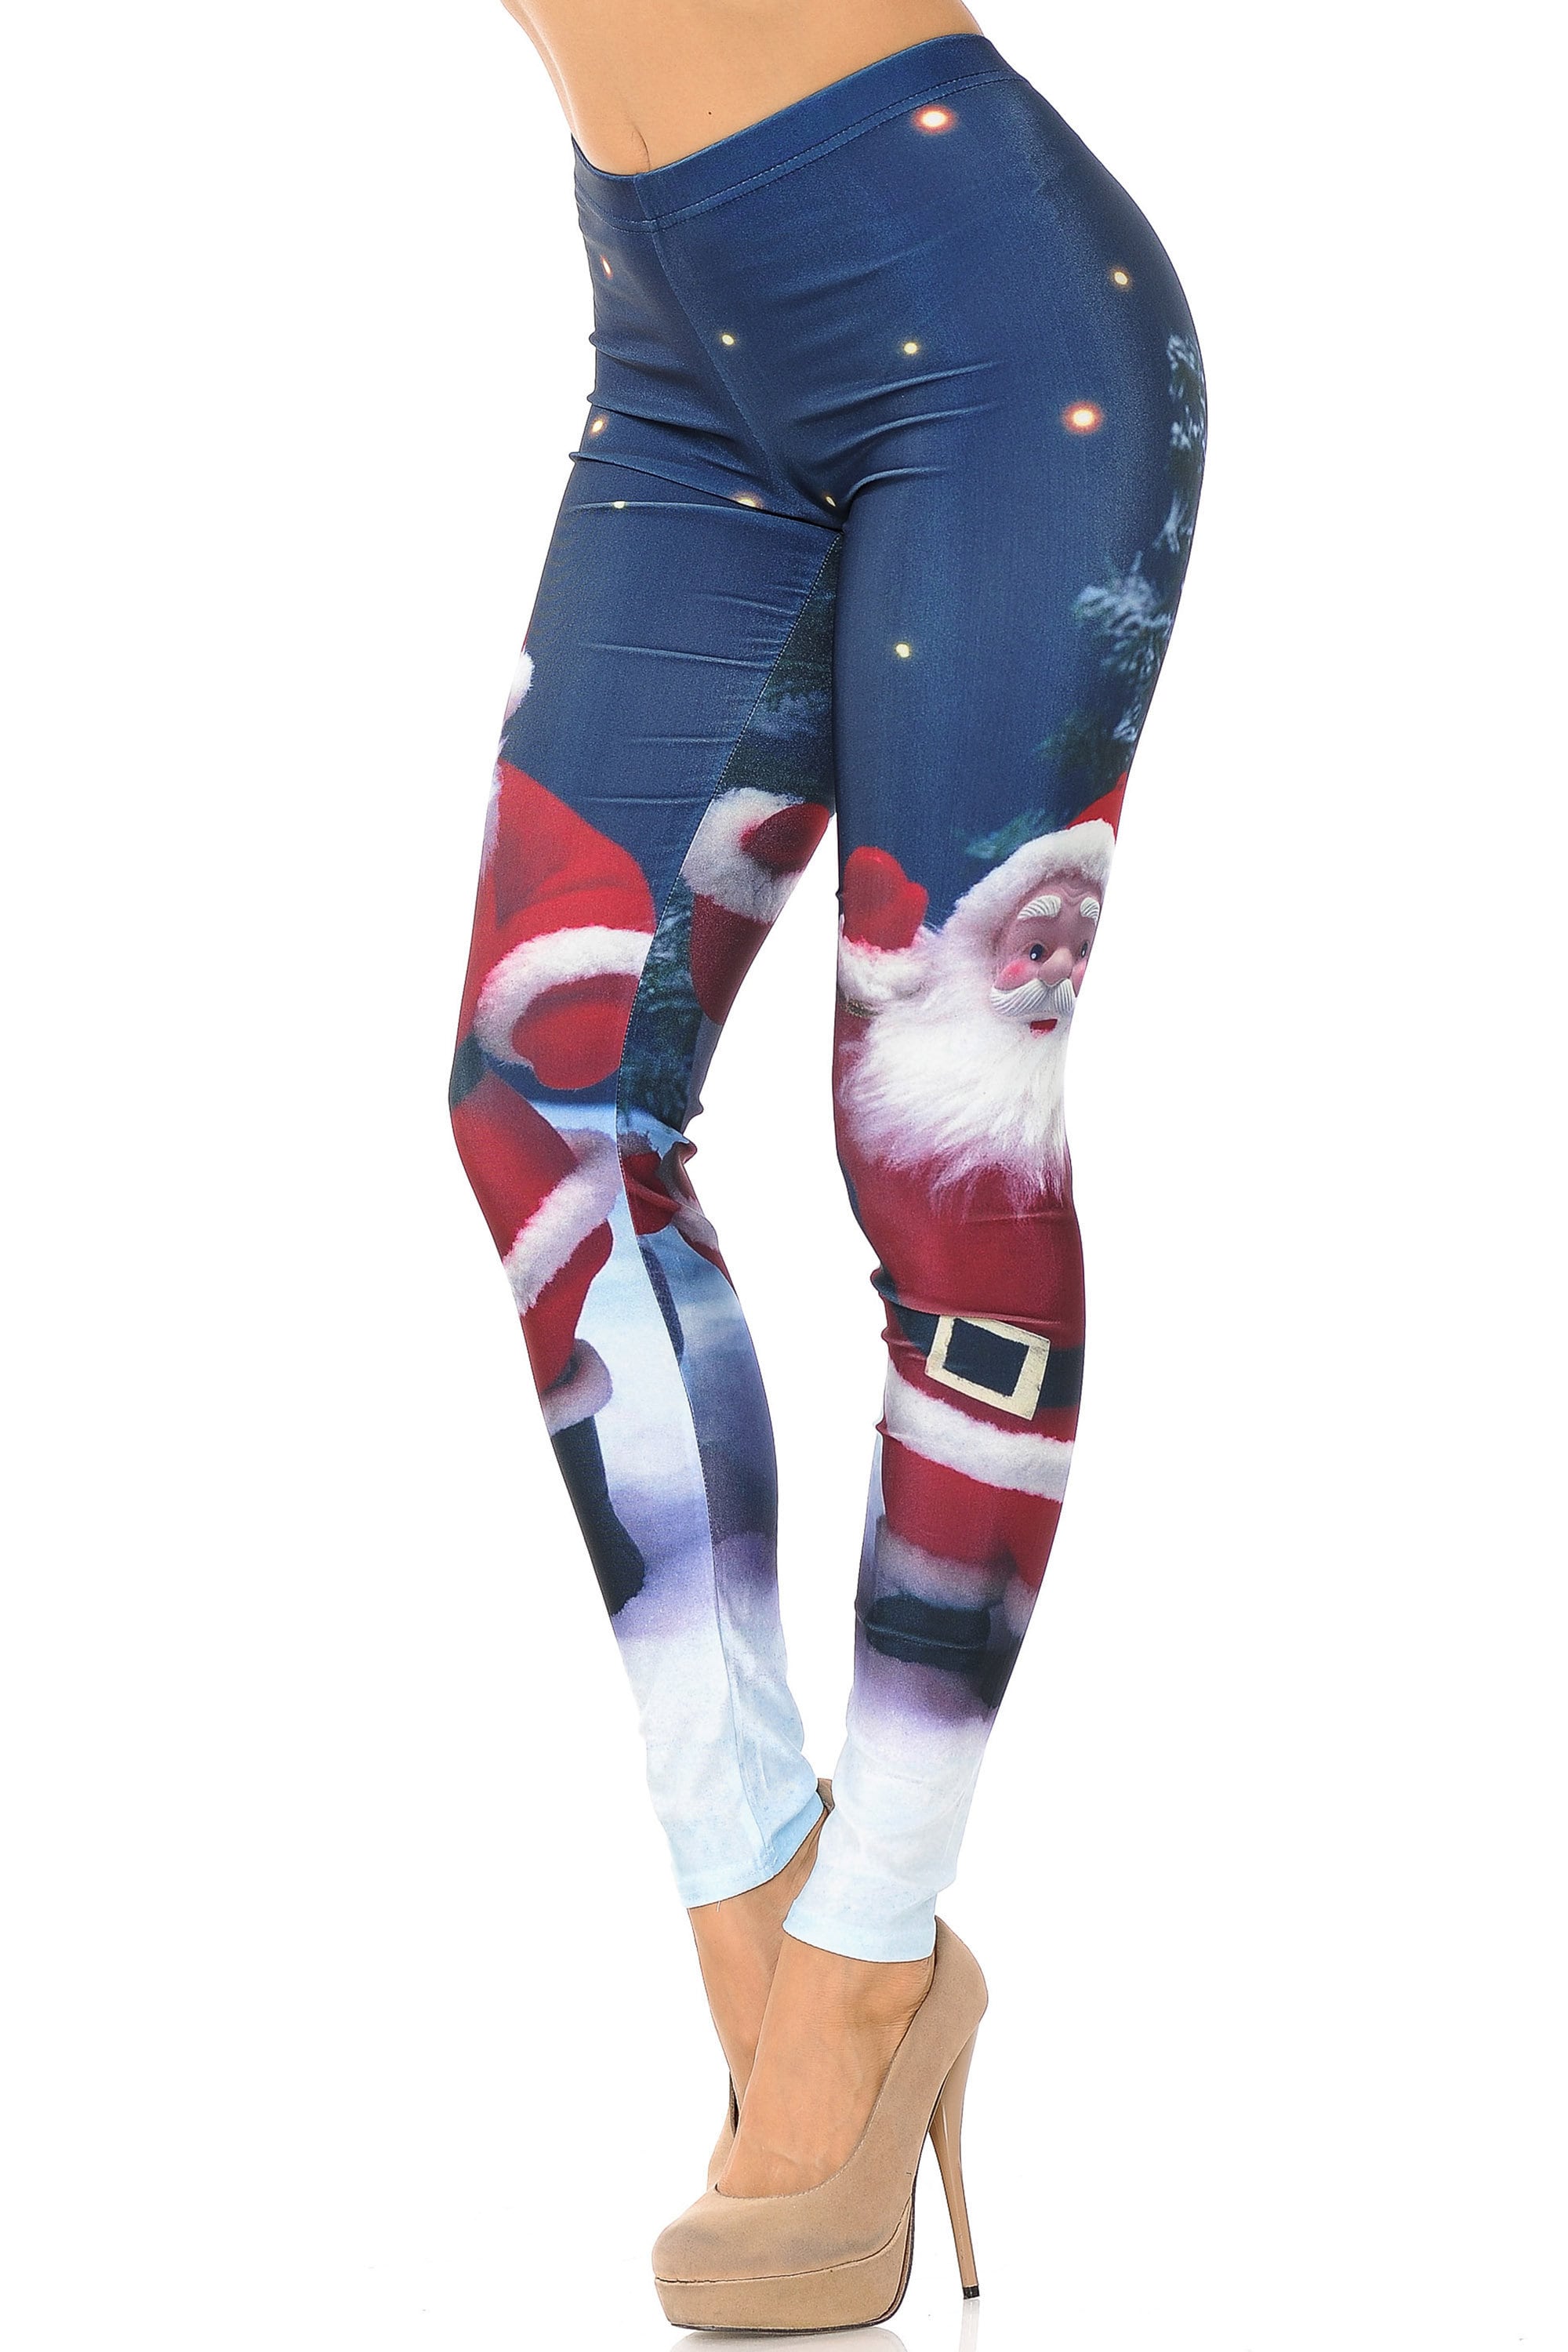 Baocc Yoga Pants Santa Women's Custom for Yoga Pants Leggings Pilates  Snowman Running Christmas Party Christmas Pants Pants for Women Black 